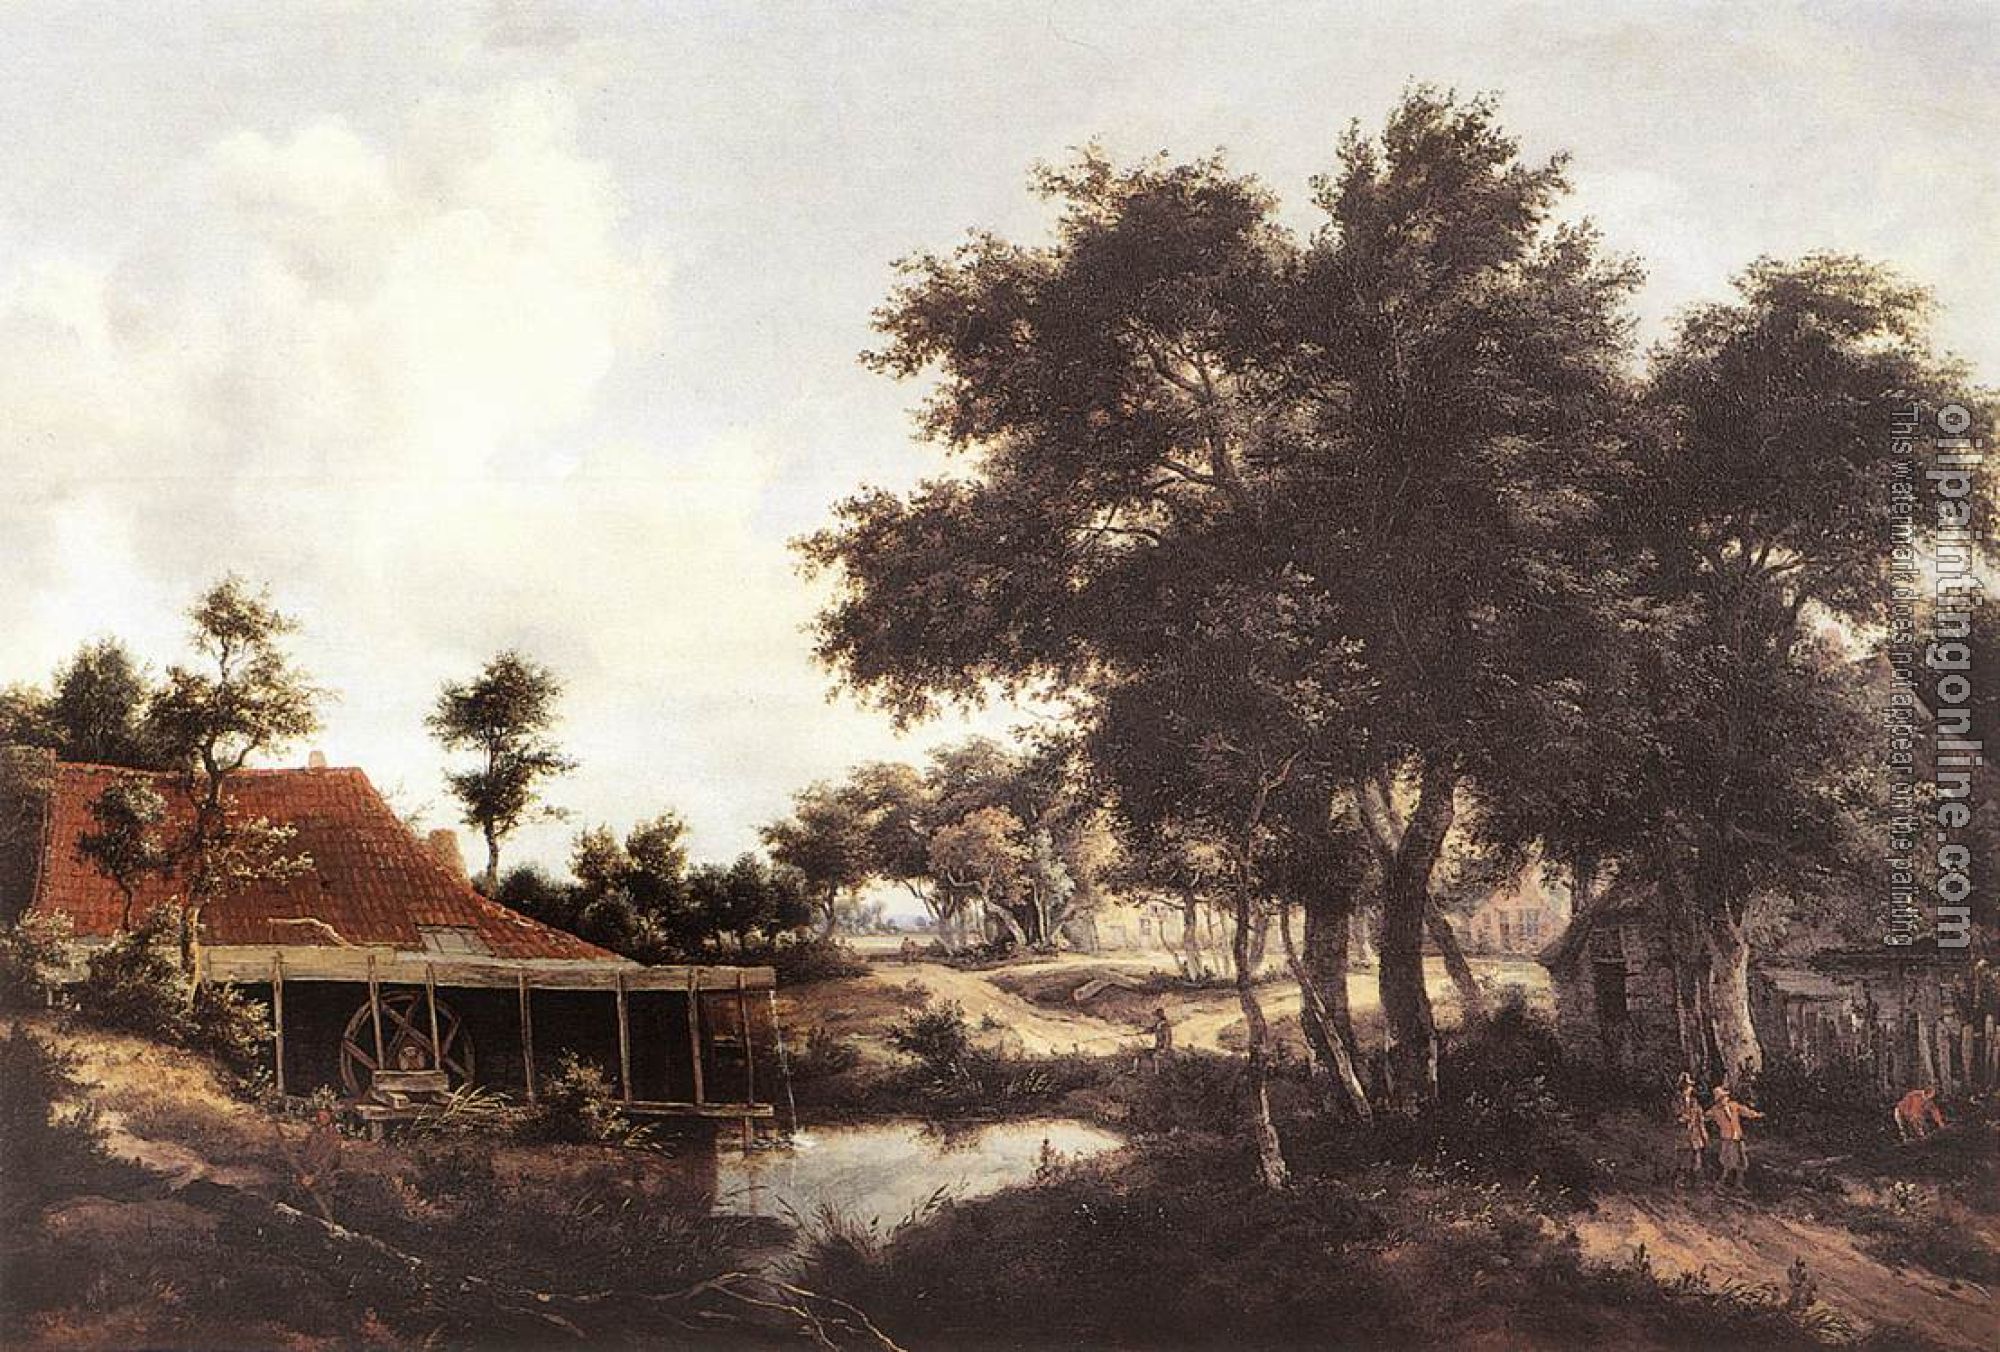 Hobbema, Meyndert - The Watermill 3